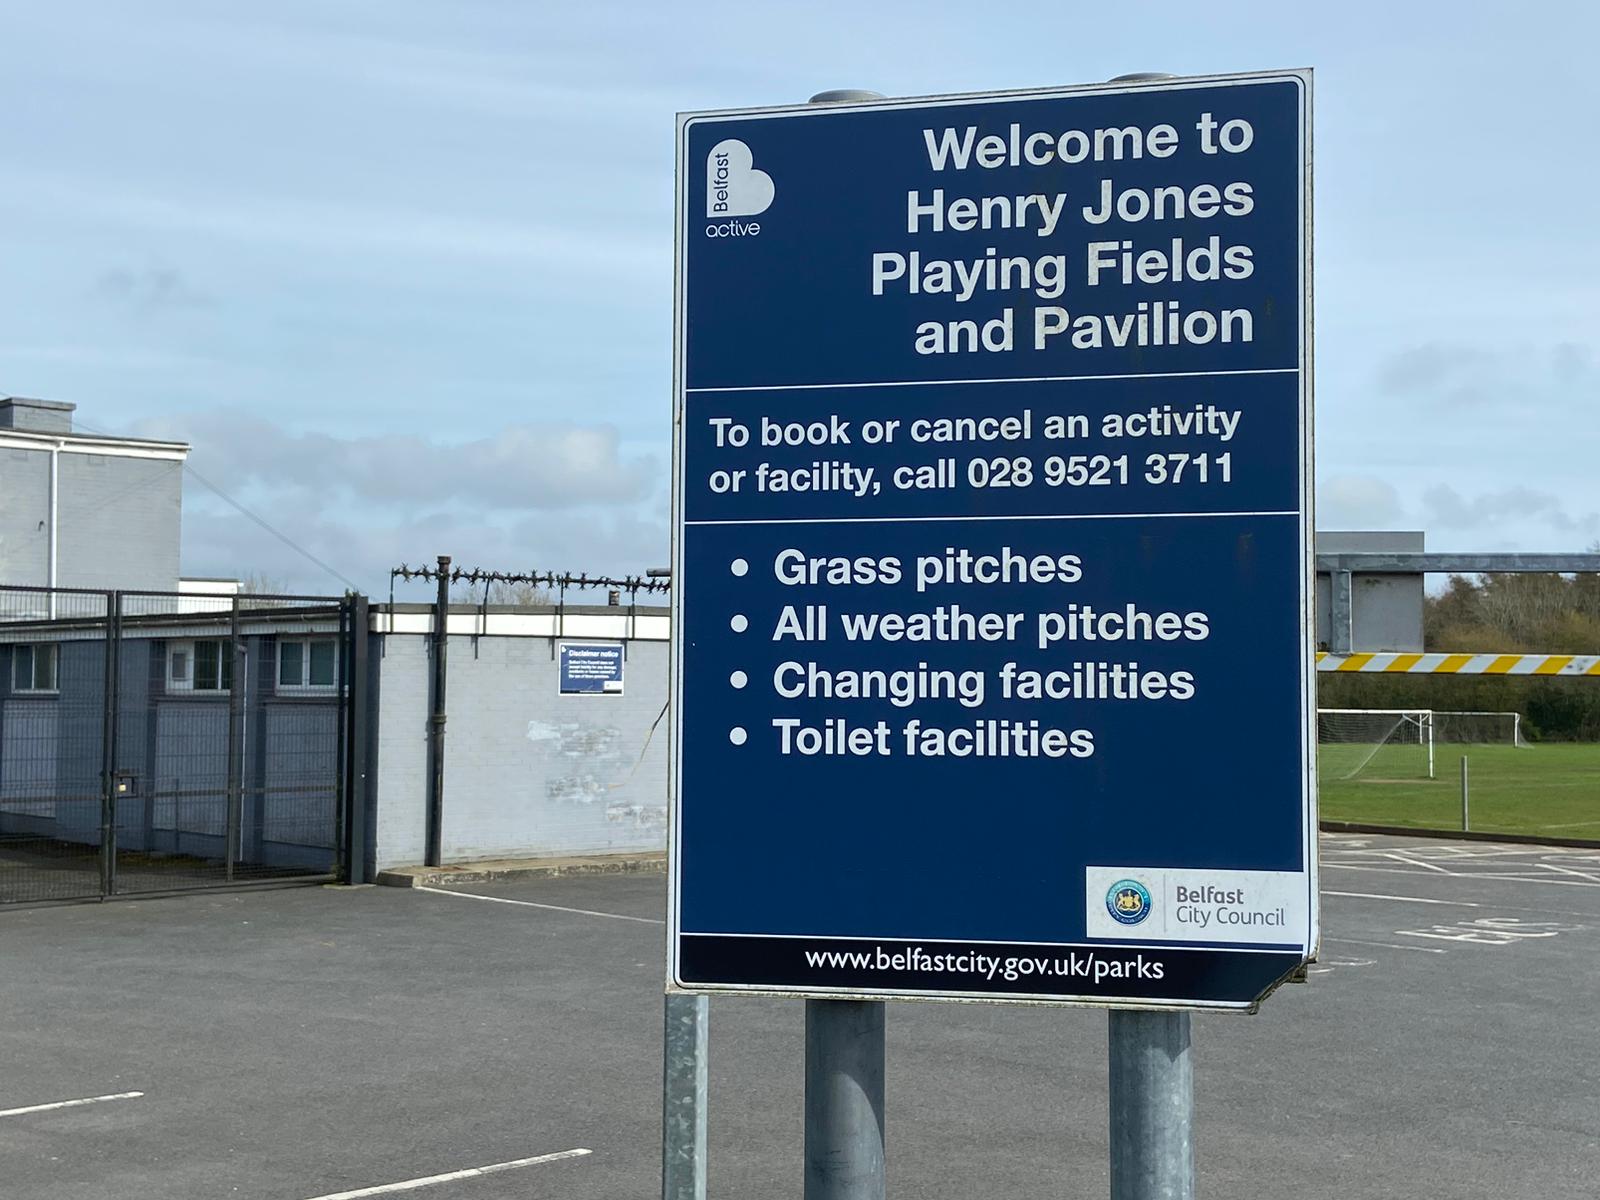 SECURITY MEASURES: Henry Jones Playing Fields